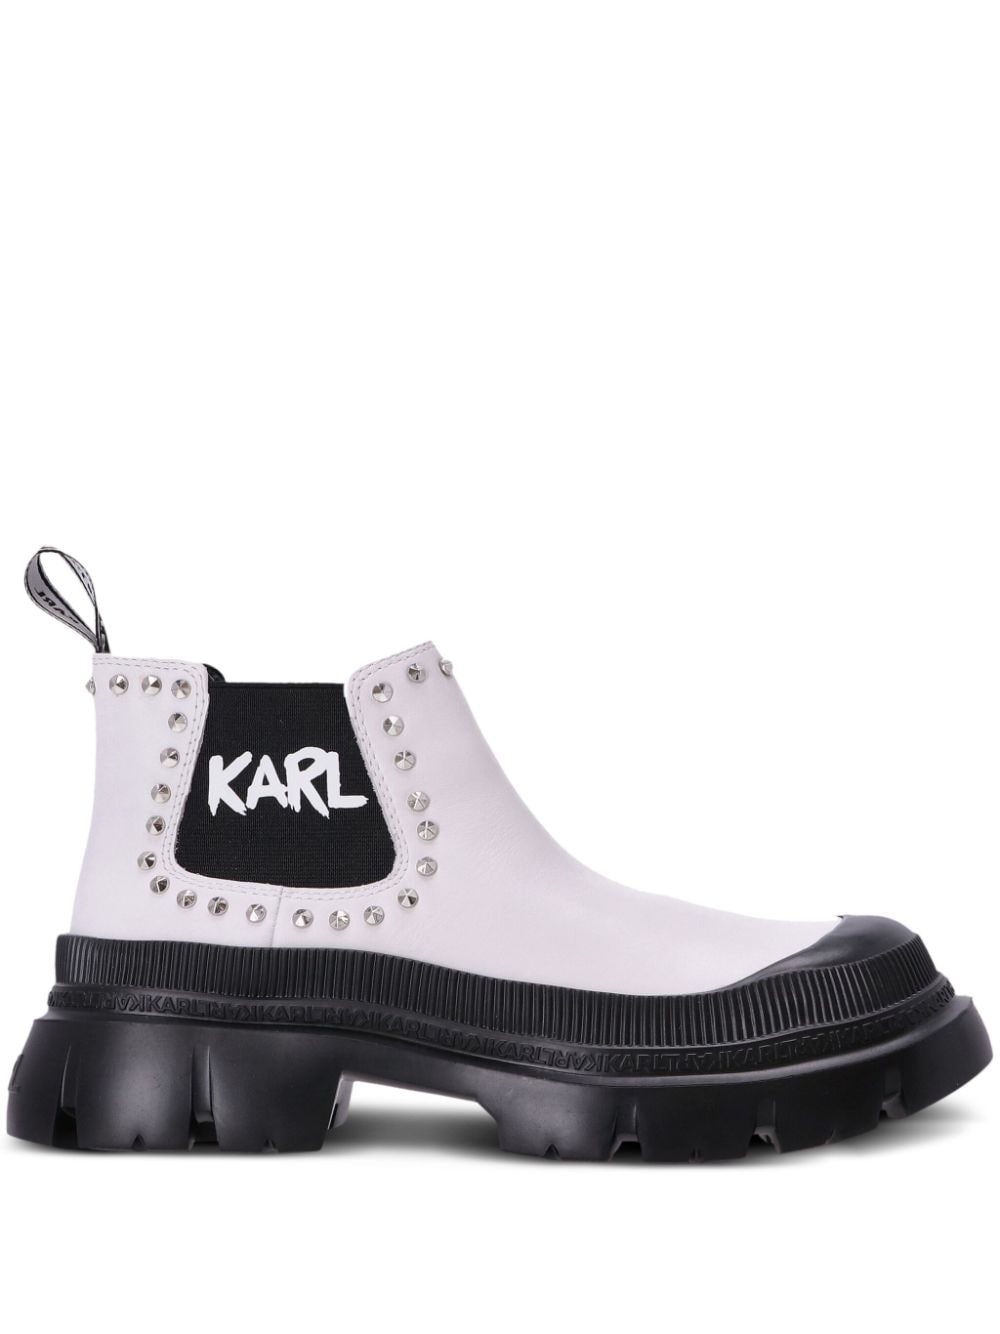 Image 1 of Karl Lagerfeld Trekka Max studded boots